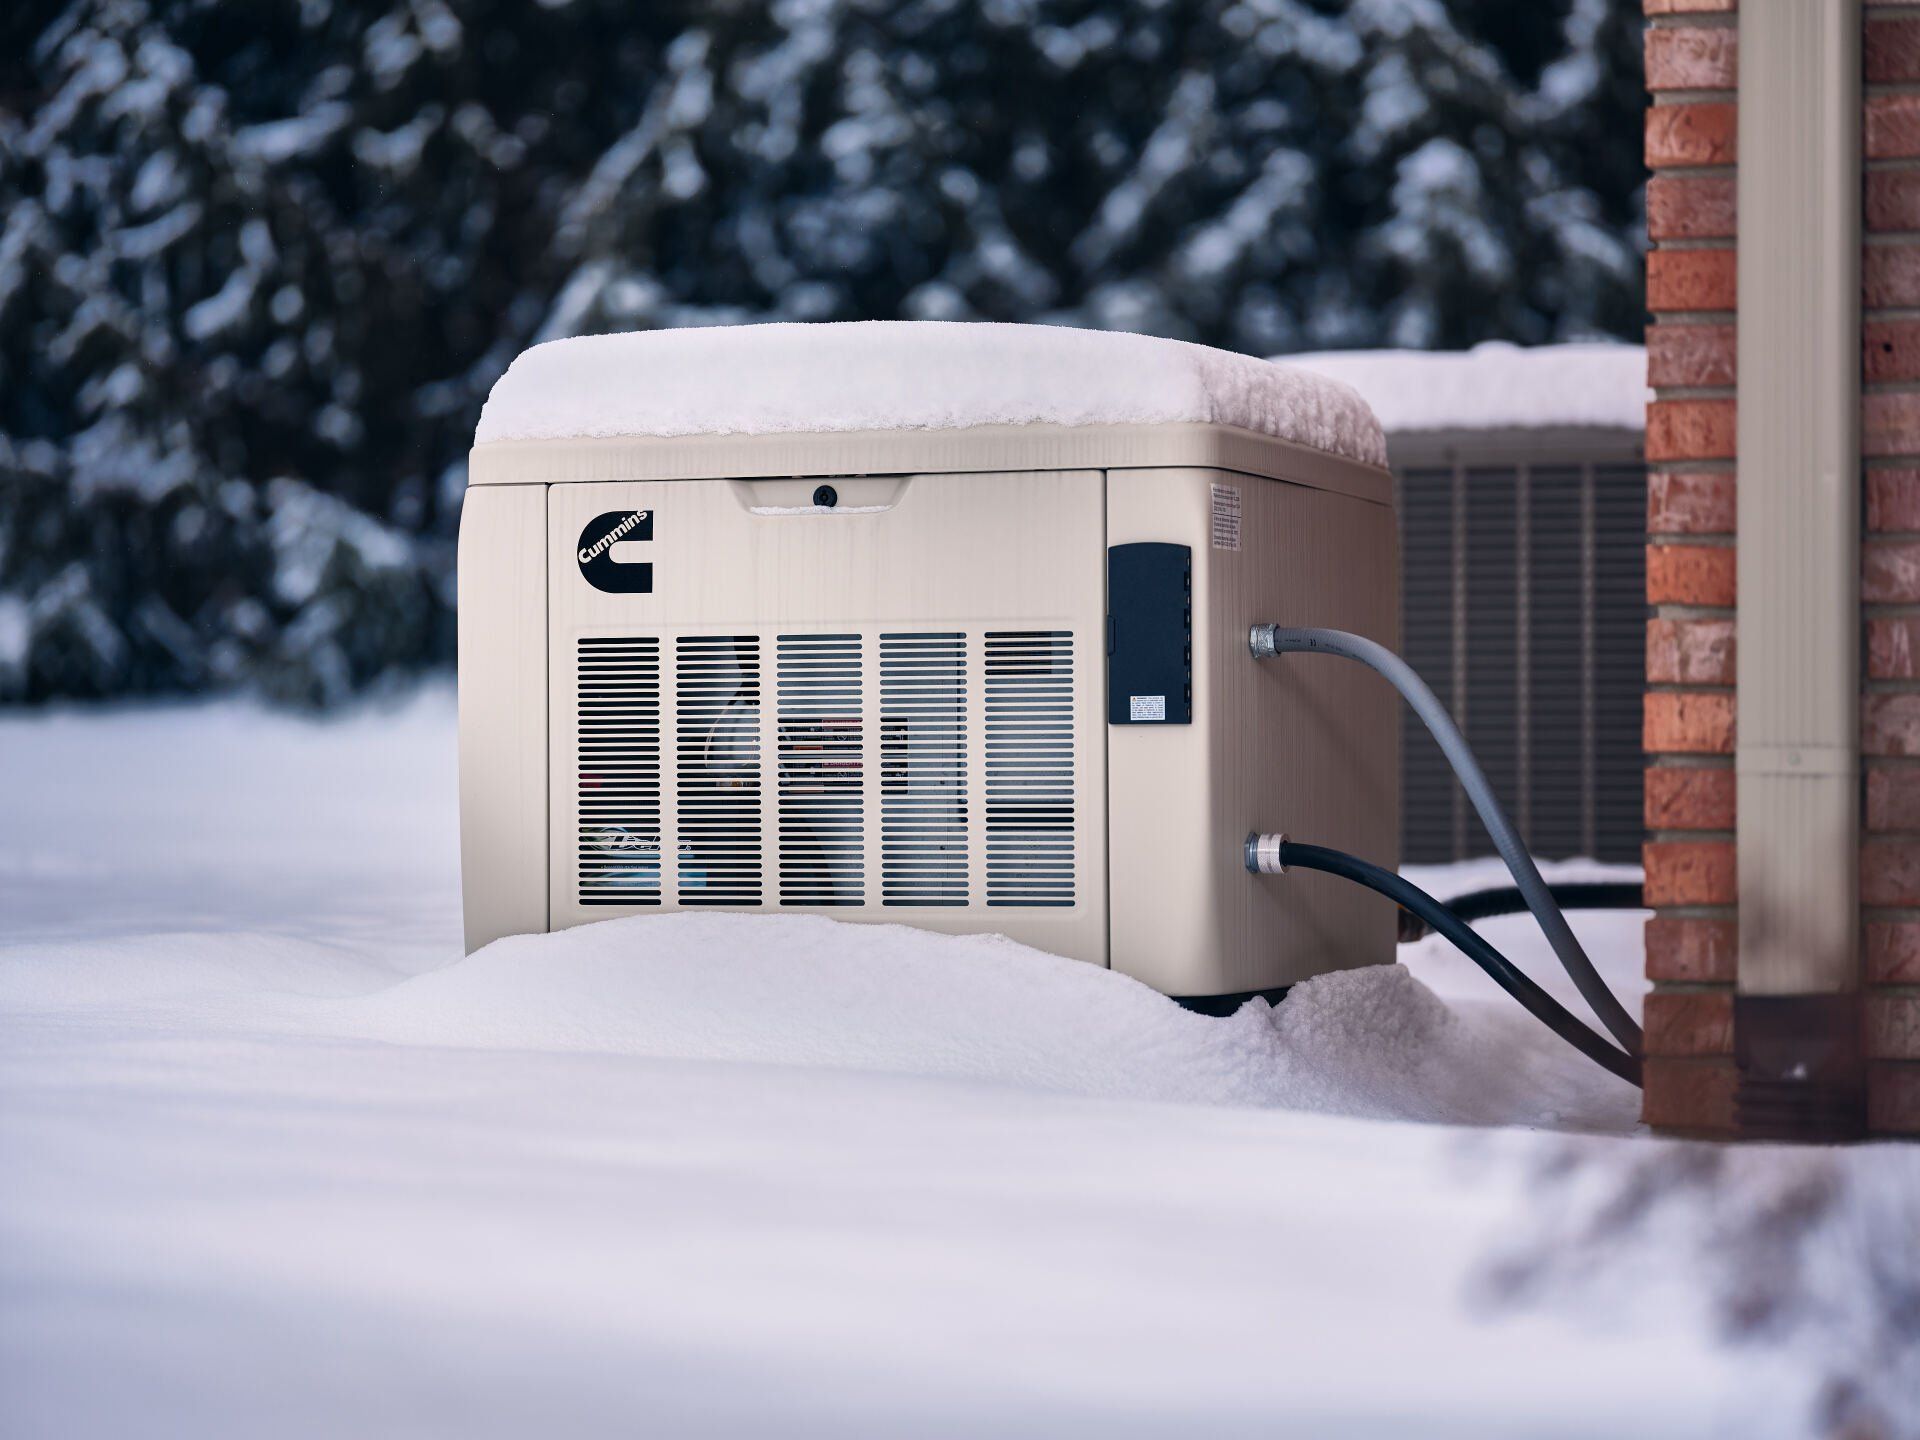 Cummins Home Generator in snow conditions.